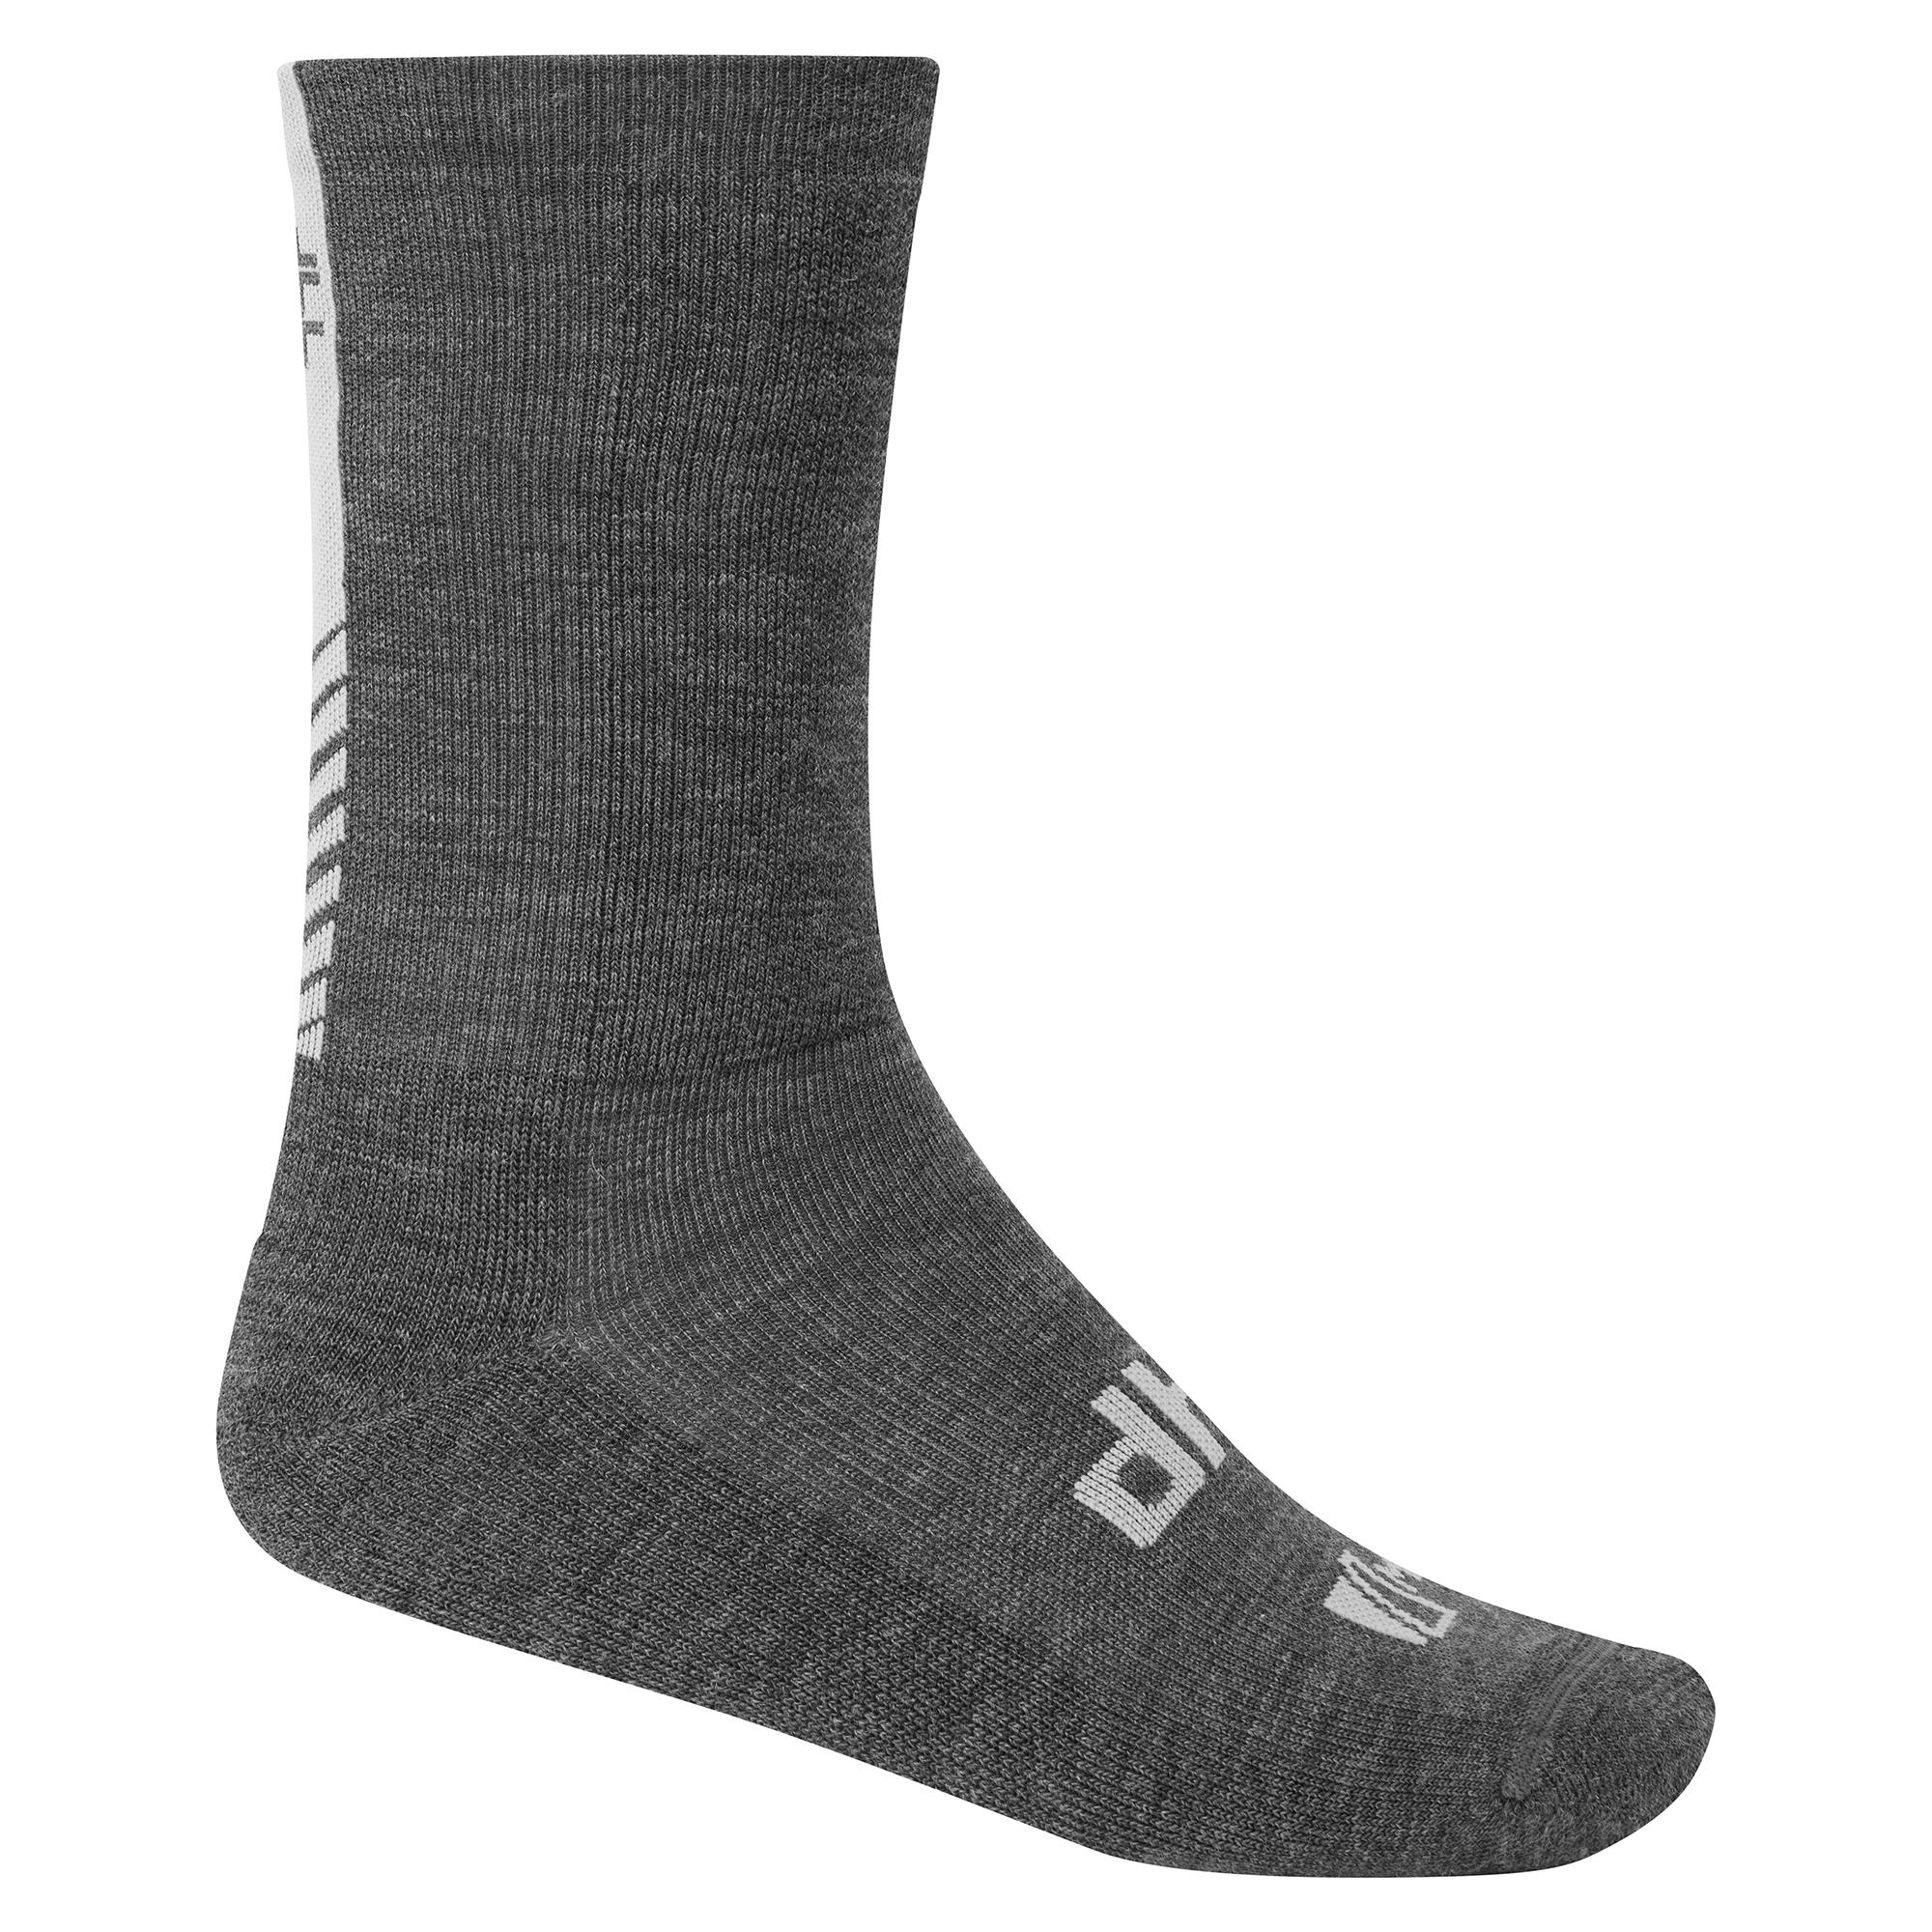 Dhb Winter Merino Trail Sock 2.0 - Granite